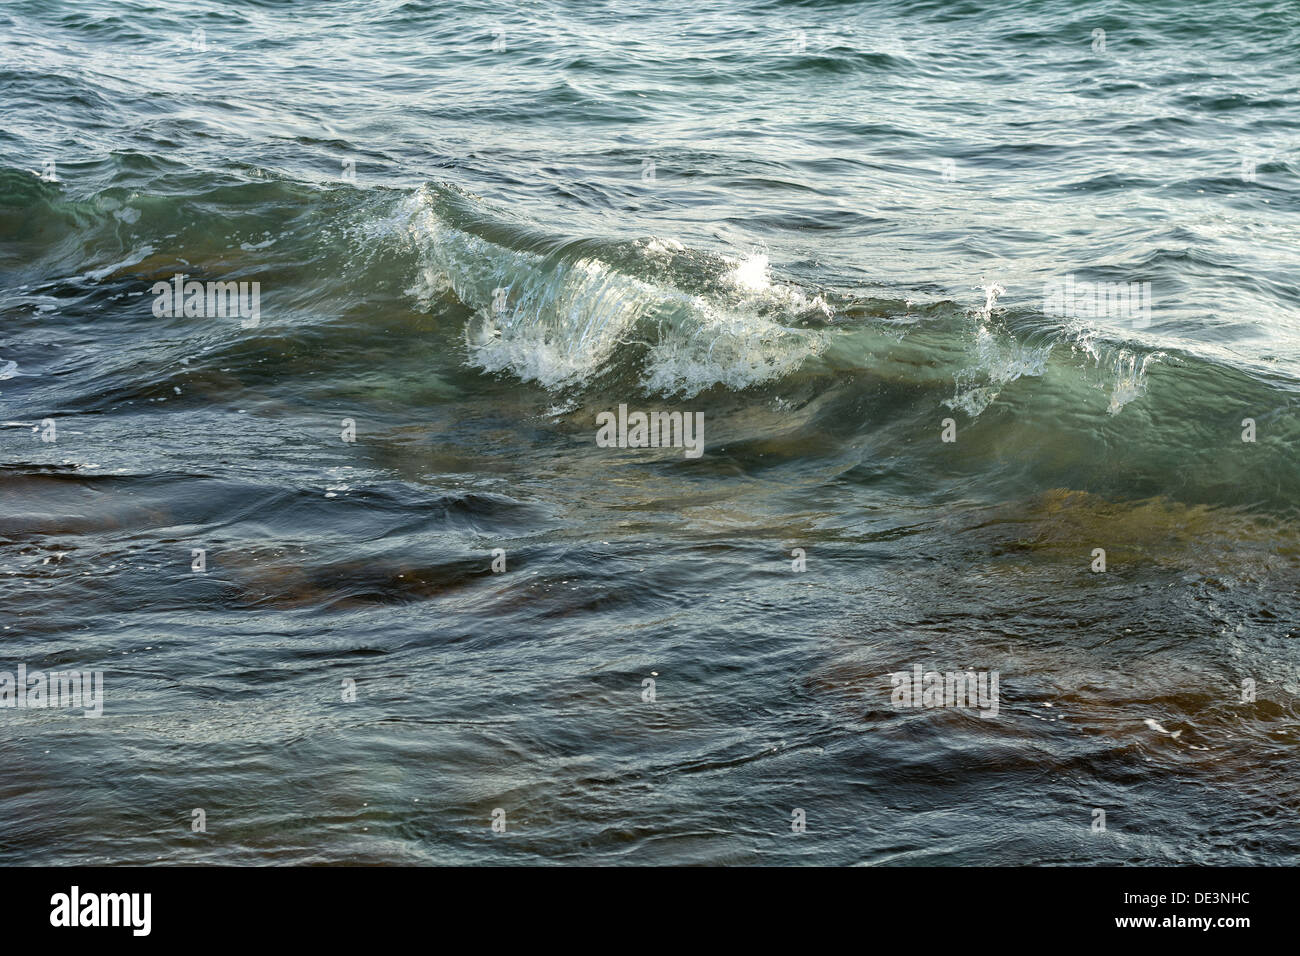 sea, Caspian Sea, water, rock, wave, beach, nature, stone, beauty, coastline, landscape, outdoors, seascape, summer, coast, ocea Stock Photo